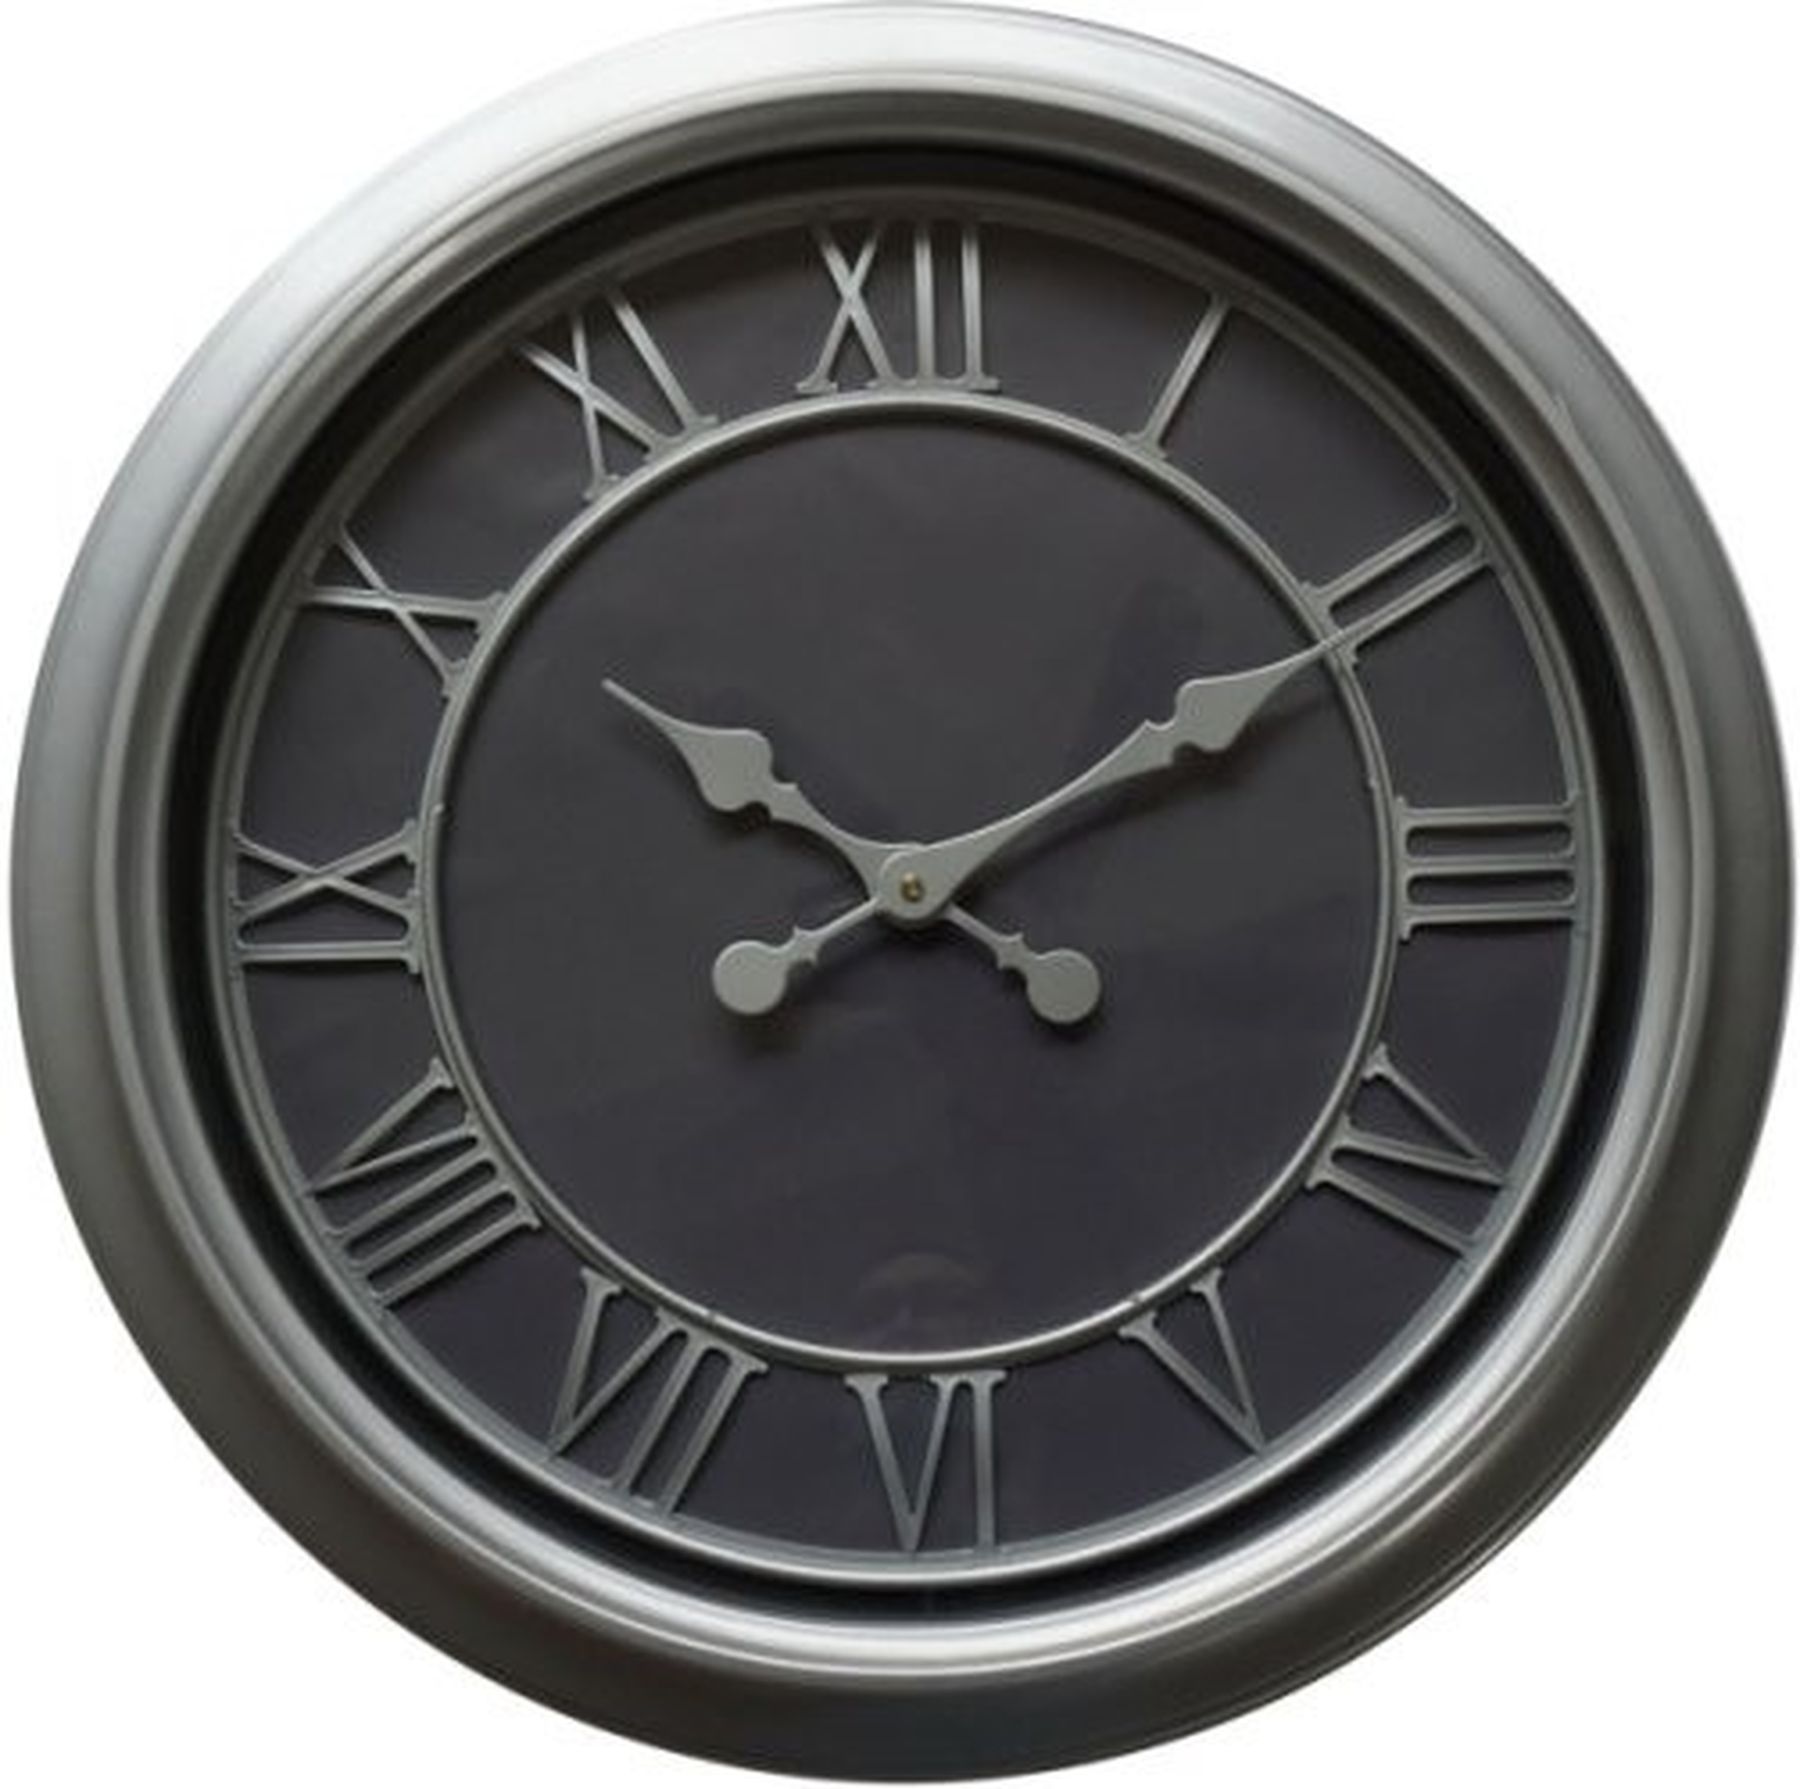 Bloomsbury Wall Clock - Image 1